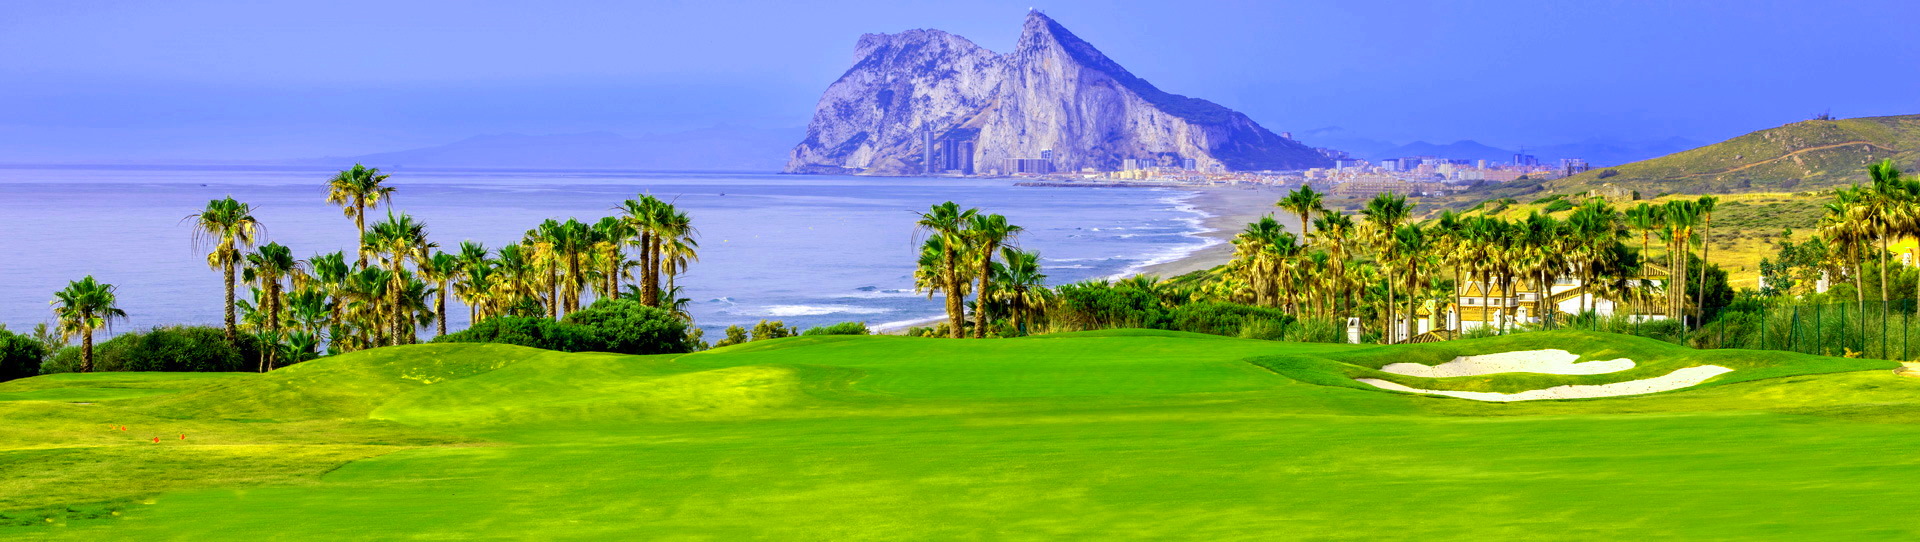 Spain golf courses - La Hacienda Alcaidesa Links Golf - Photo 2